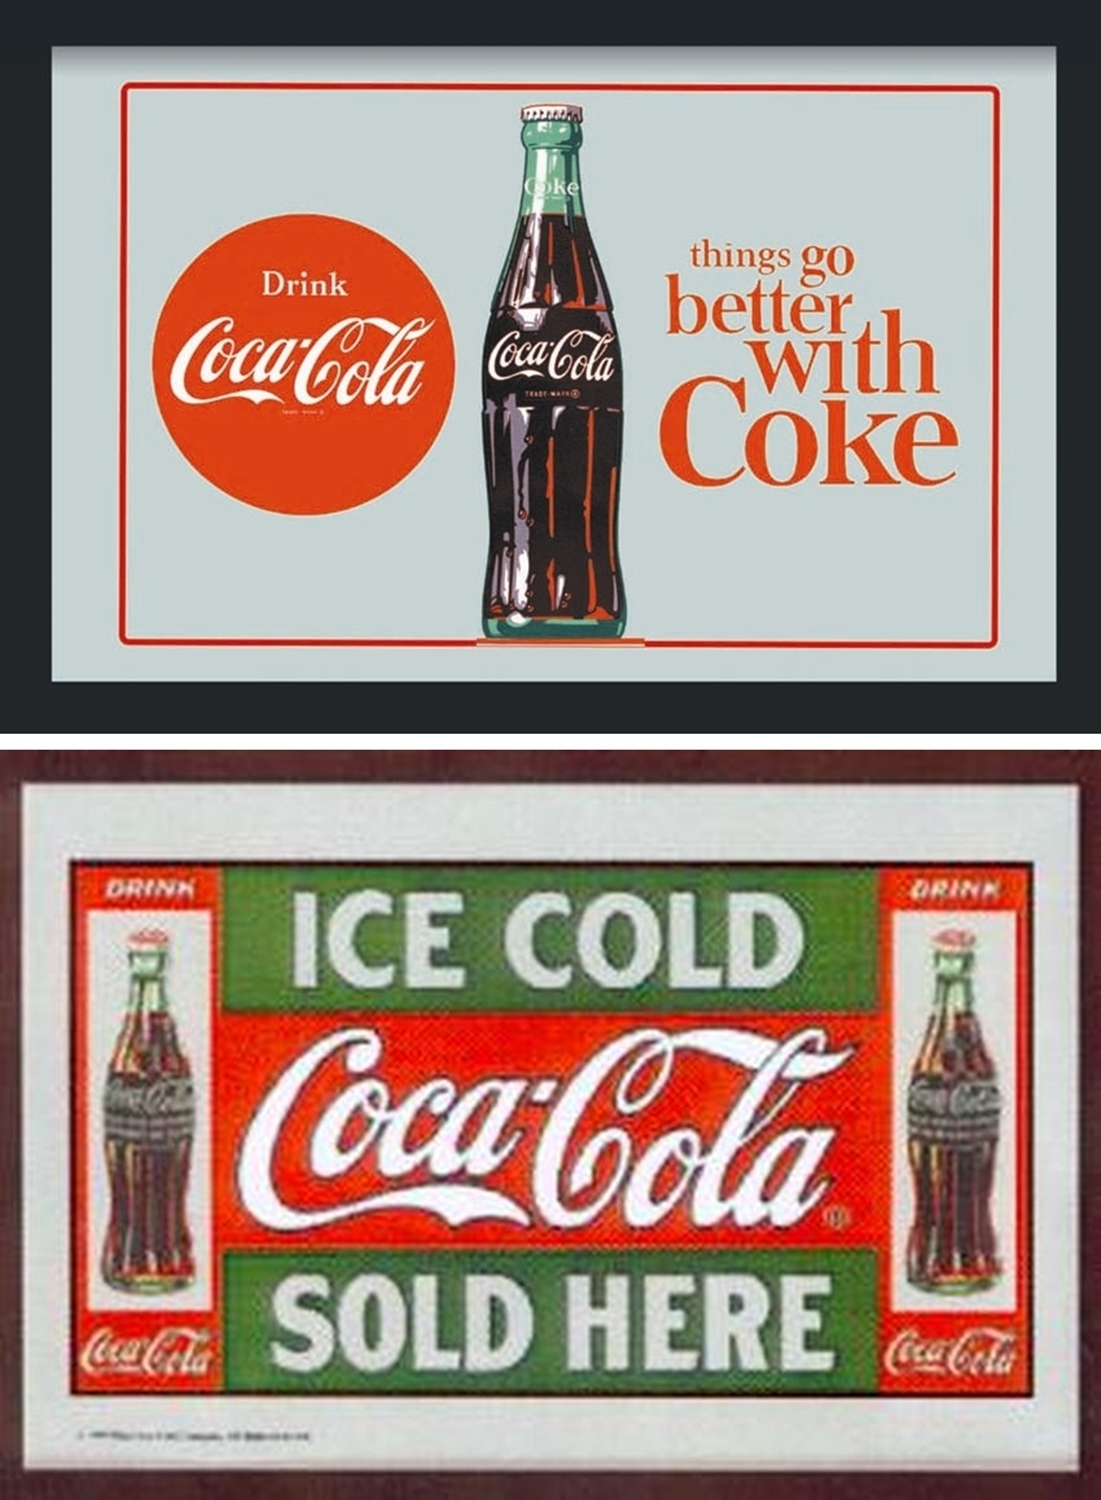 Retro Deko Coca Cola